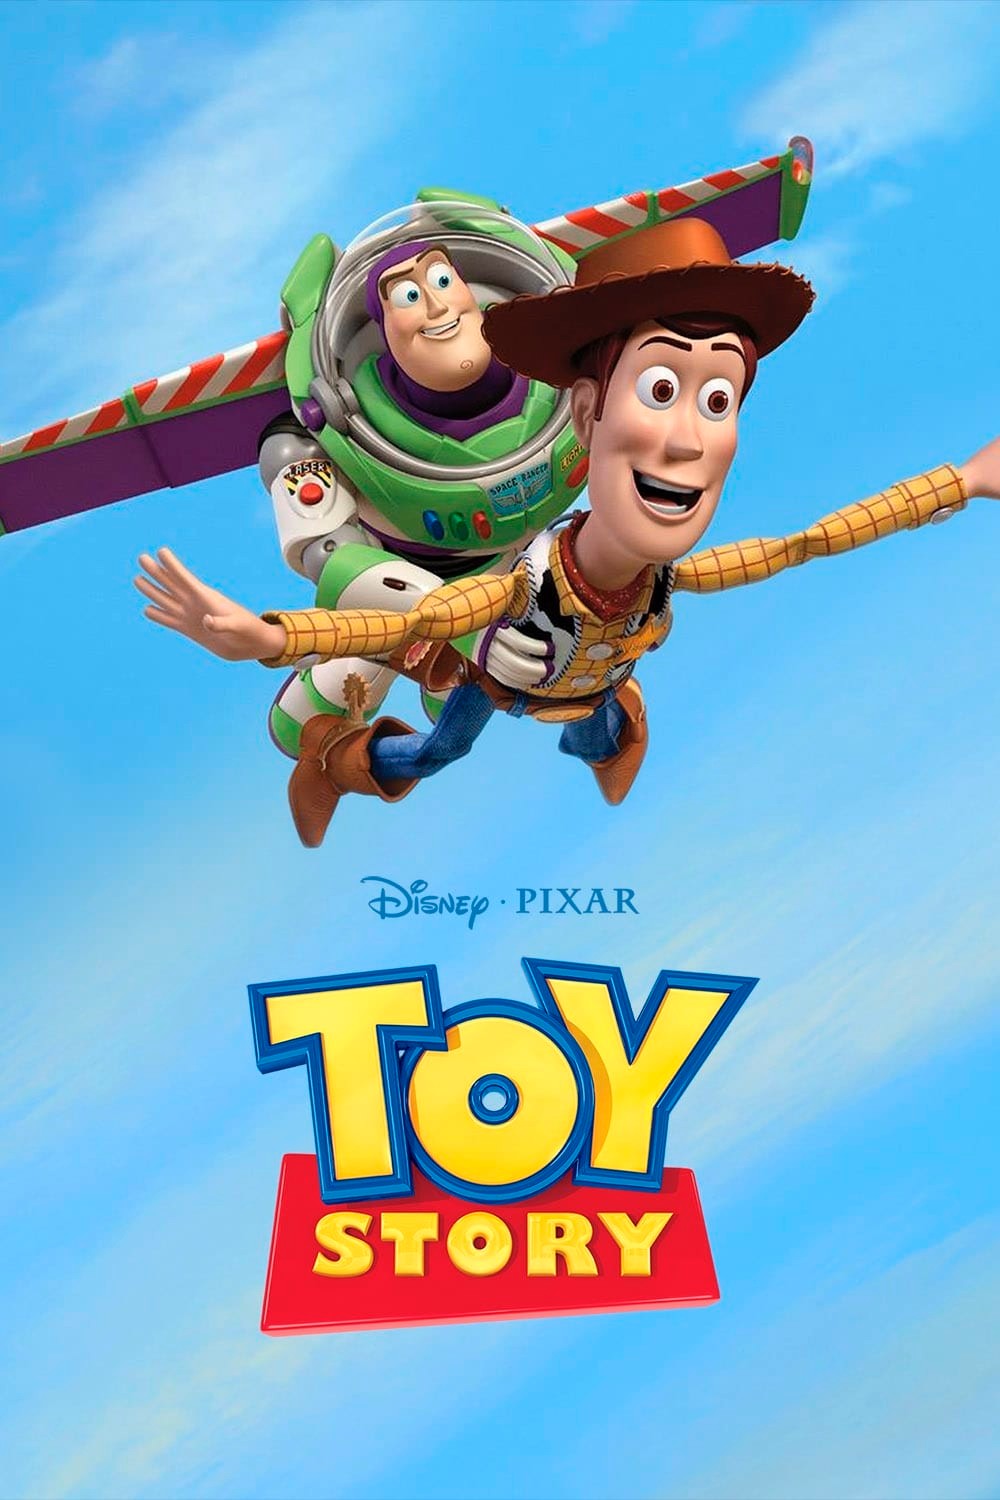 Toy Story 1 ทอย สตอรี่ พากย์ไทย (1995)